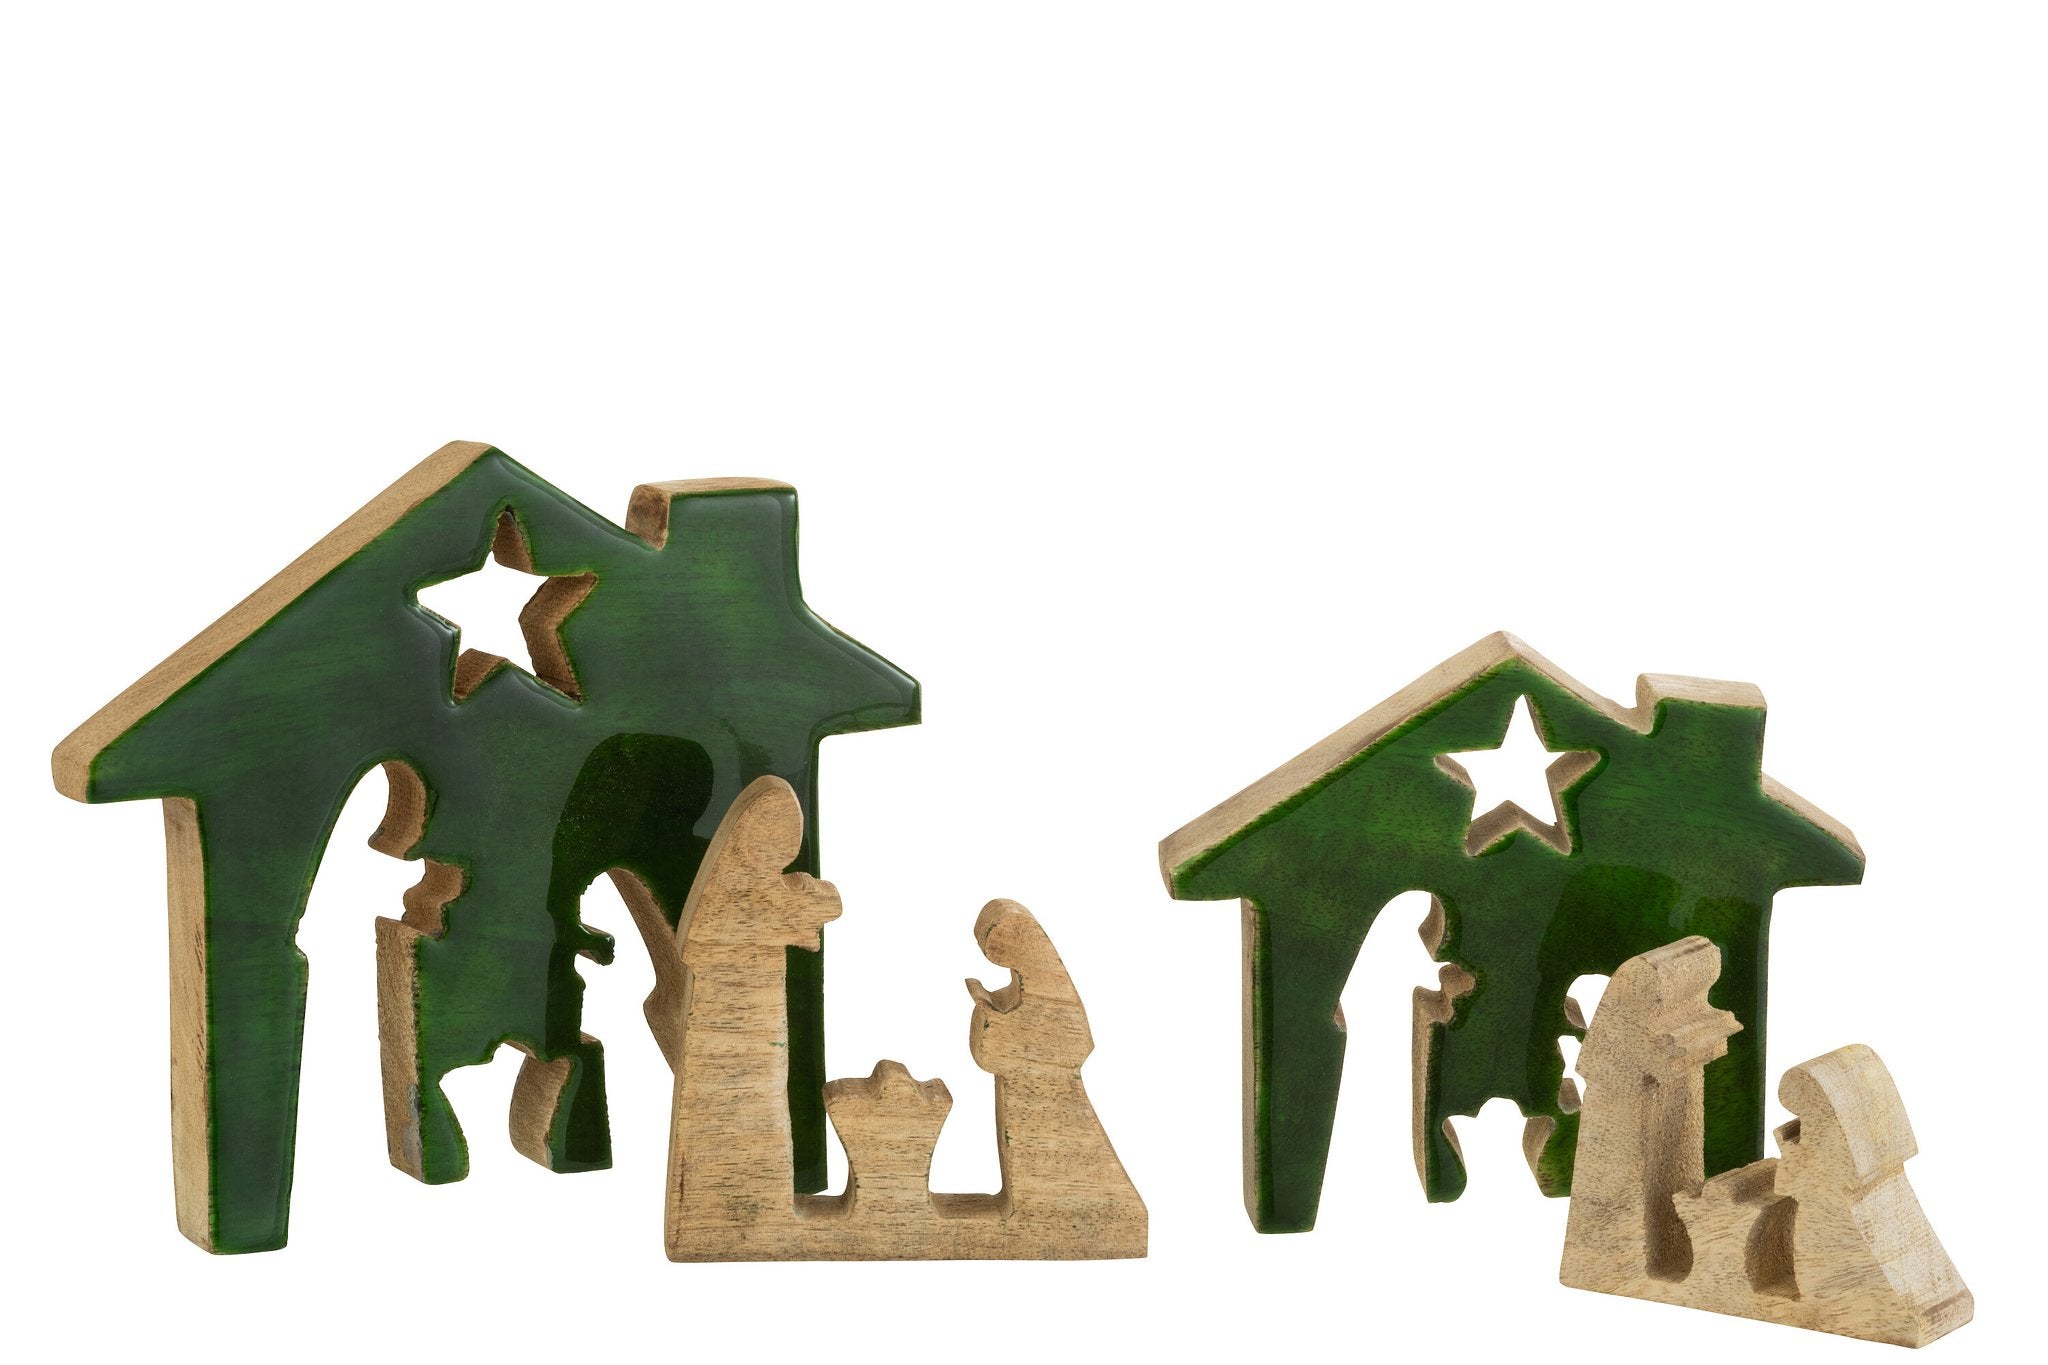 J-Line Kerstcadeau - Kribbe in huisvorm - hout, groen, naturel - formaat large - Kerstmis decoratie